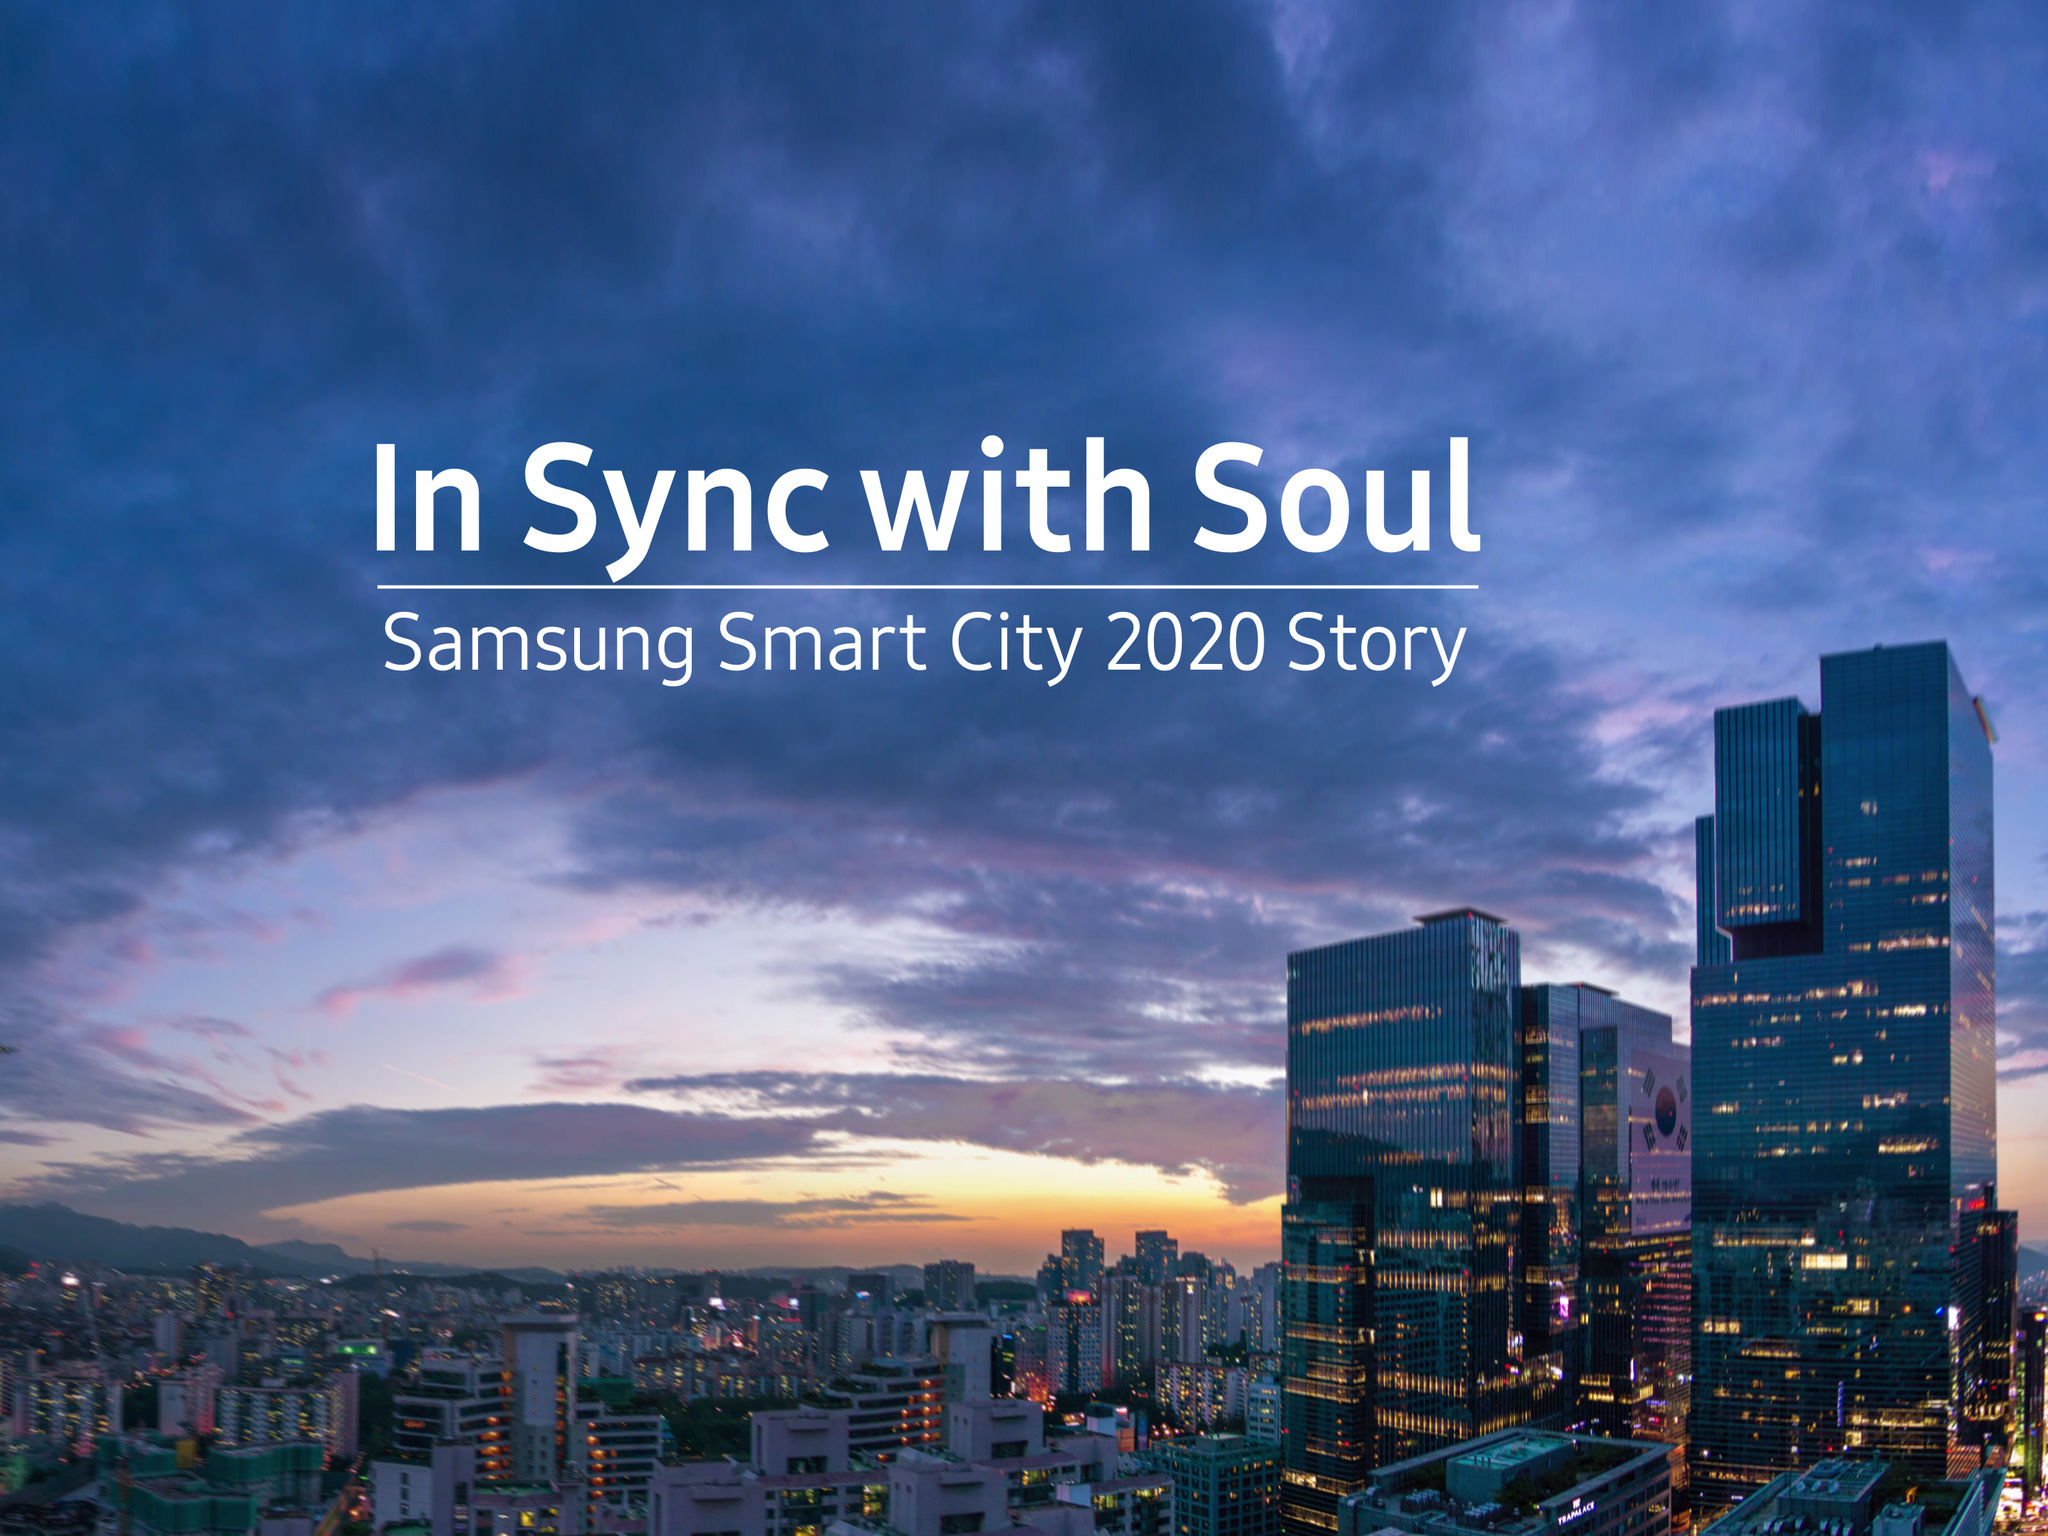 Samsung Smart City 2020